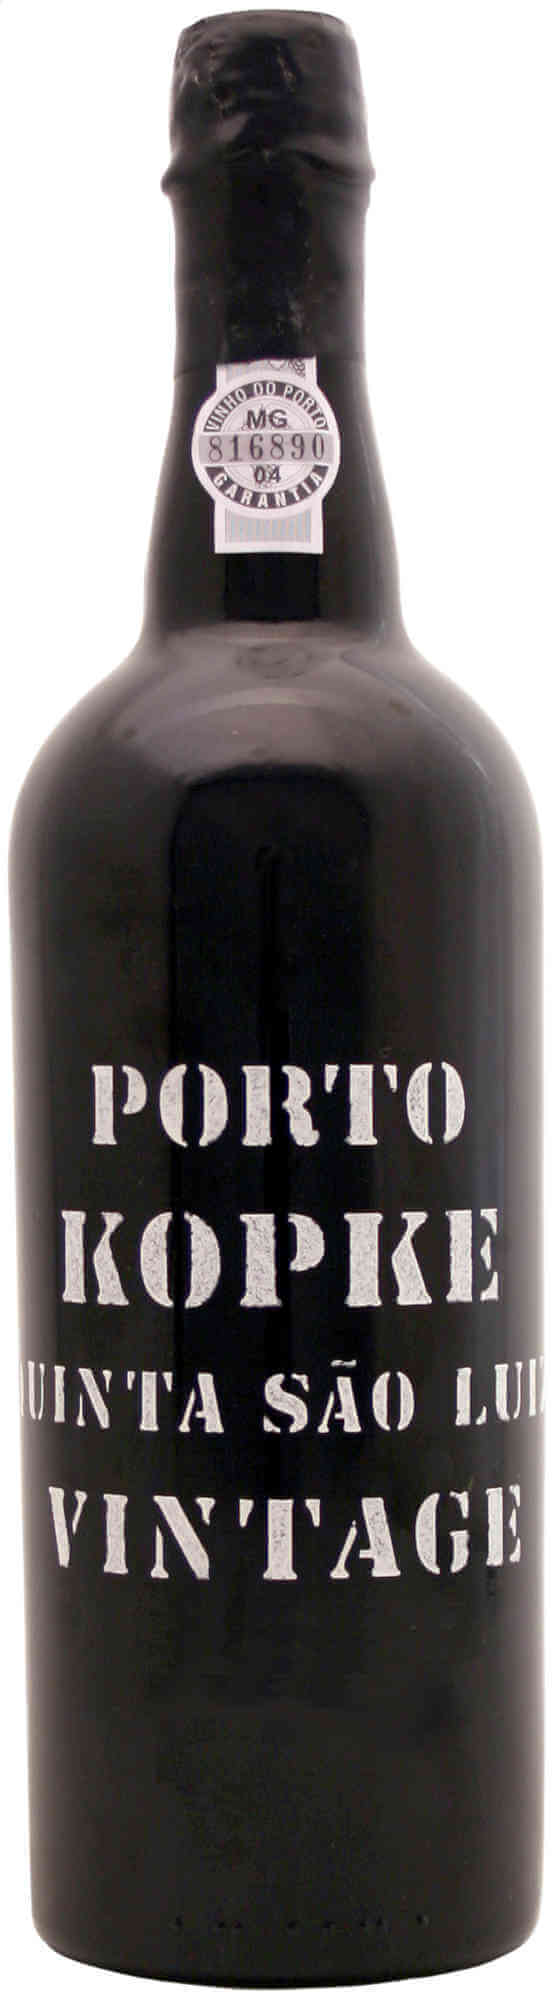 Kopke-Vintage-Port-S-Luiz-nV